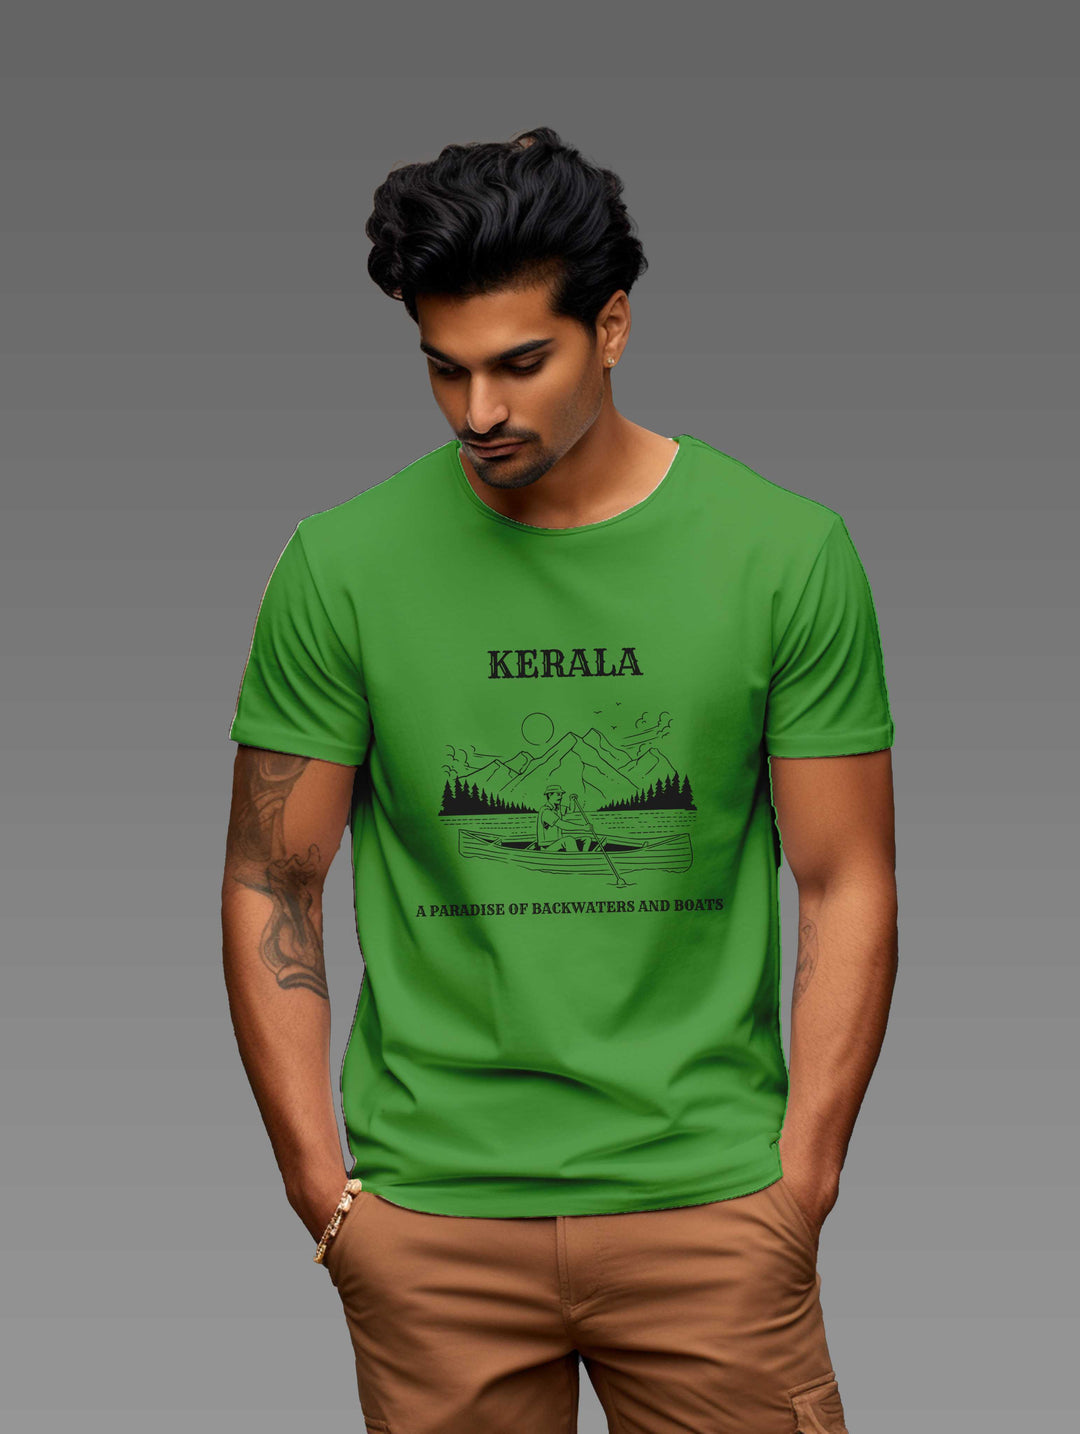 Men's  Kerala Blackwater and Boatstee